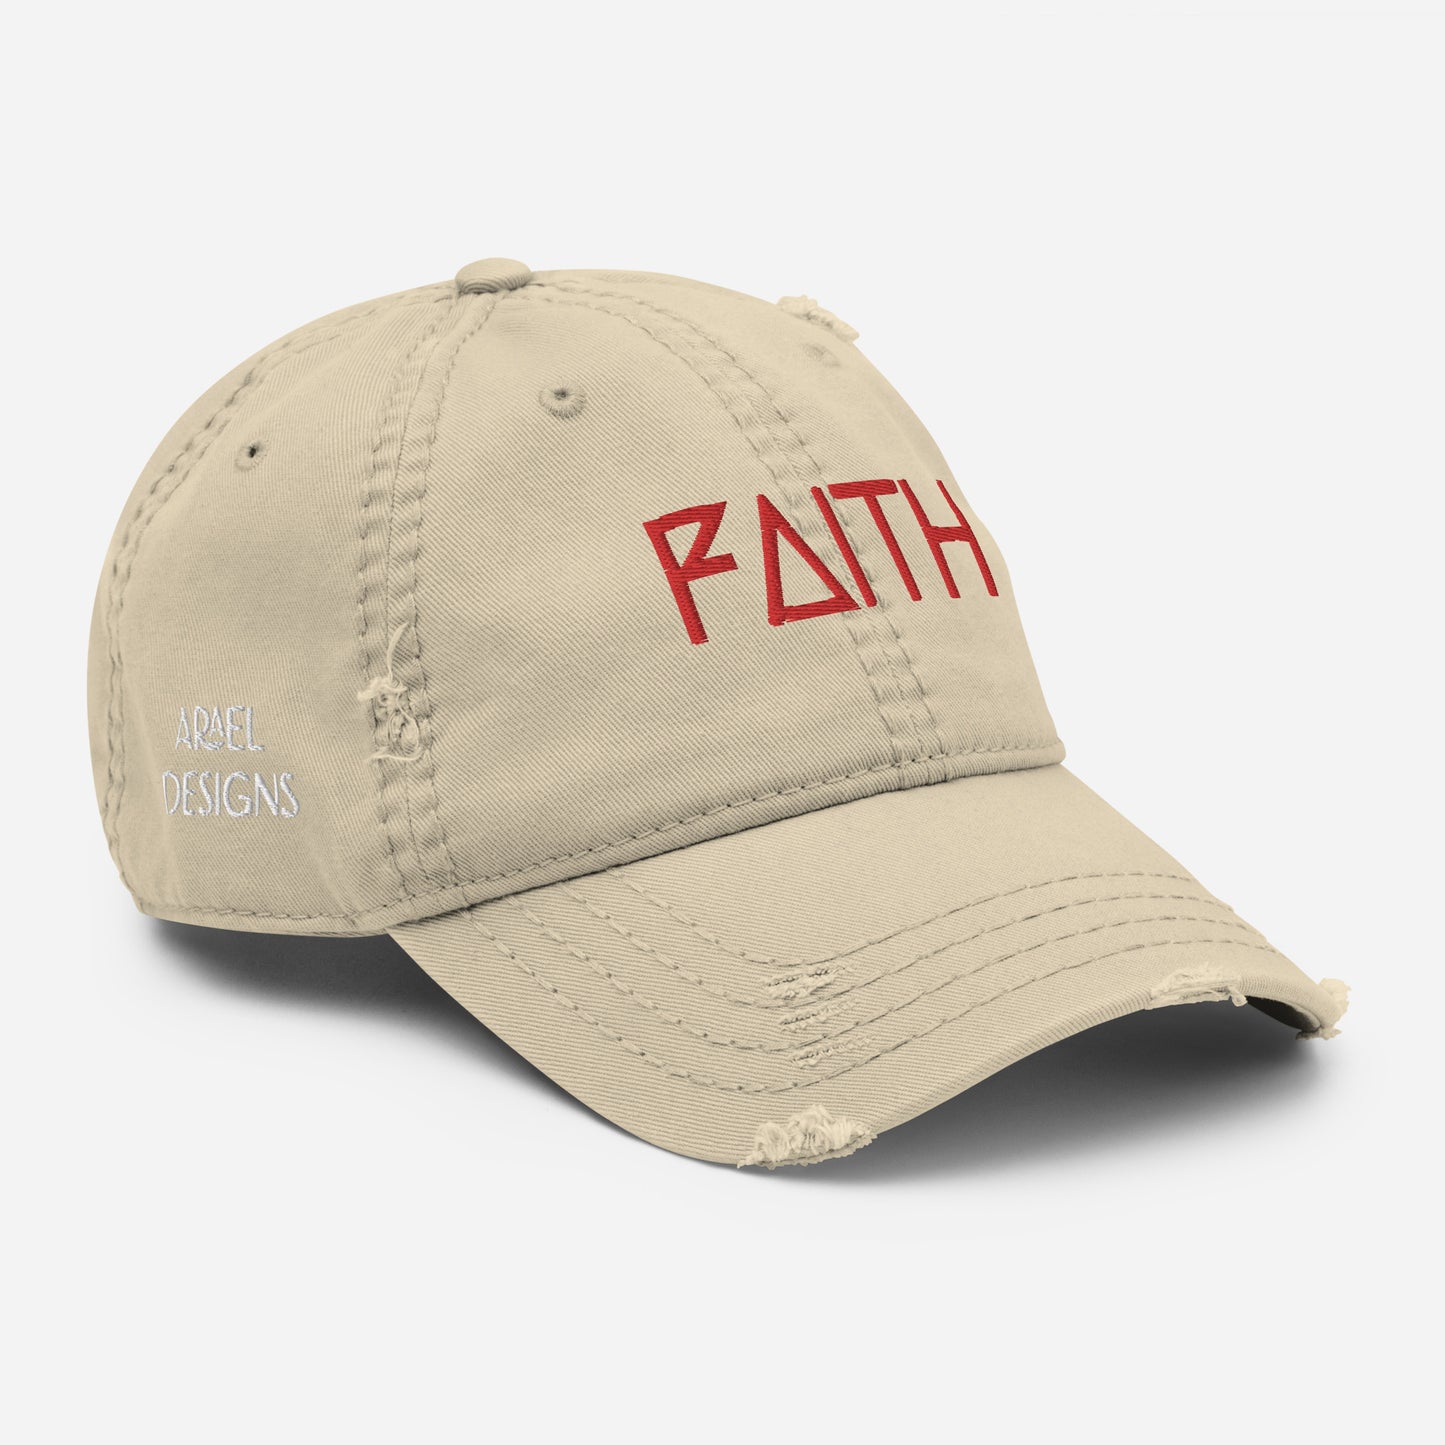 Faith Distressed Dad Hat